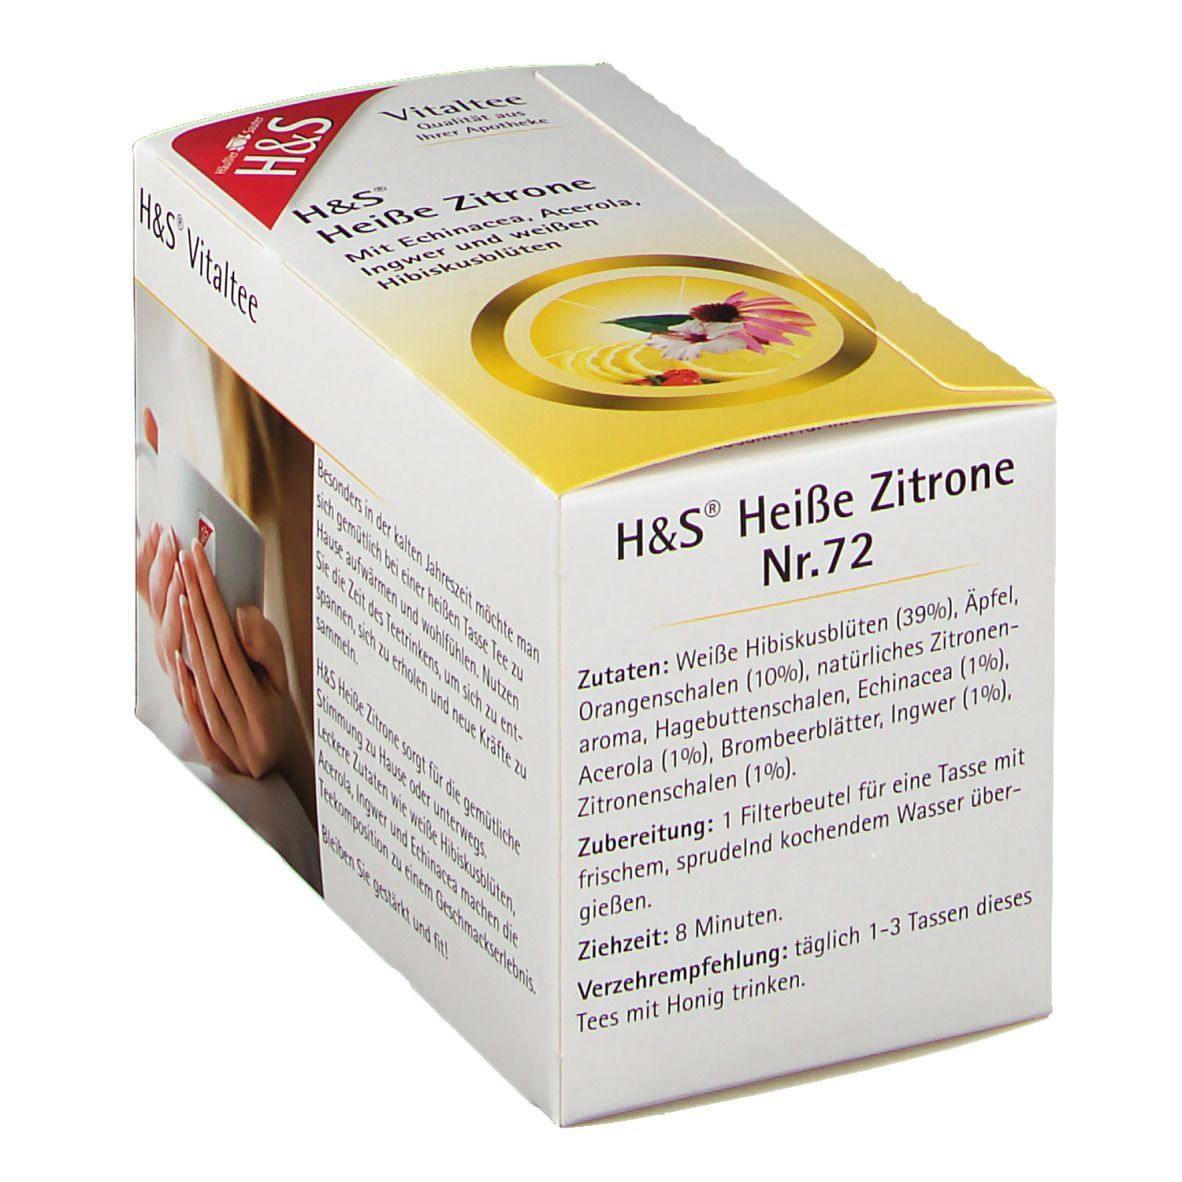 H&S Heiße Zitrone Vitaltee Nr. 72